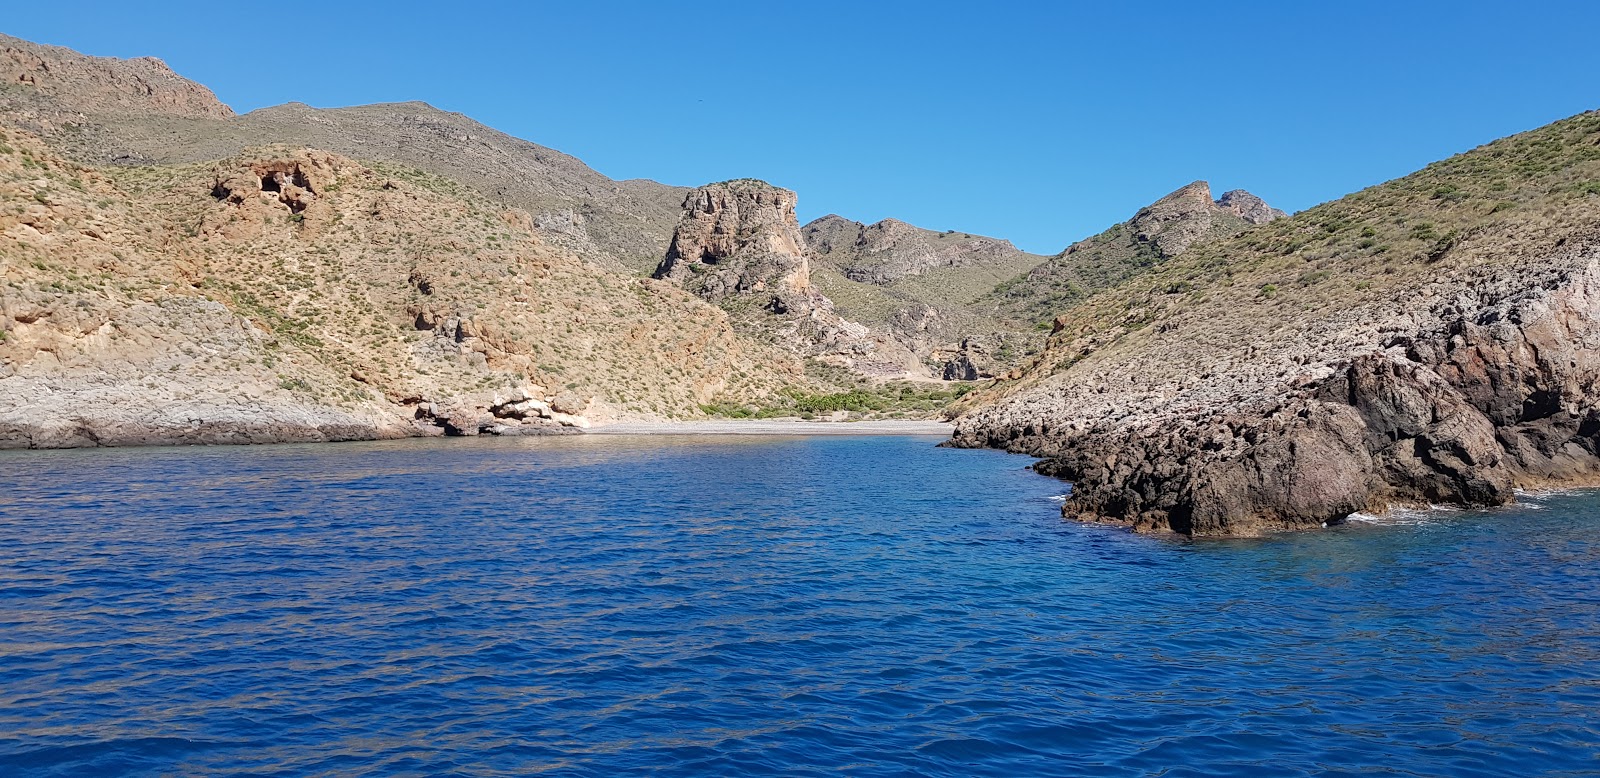 Photo of Playa Cala Cerrada with gray fine pebble surface